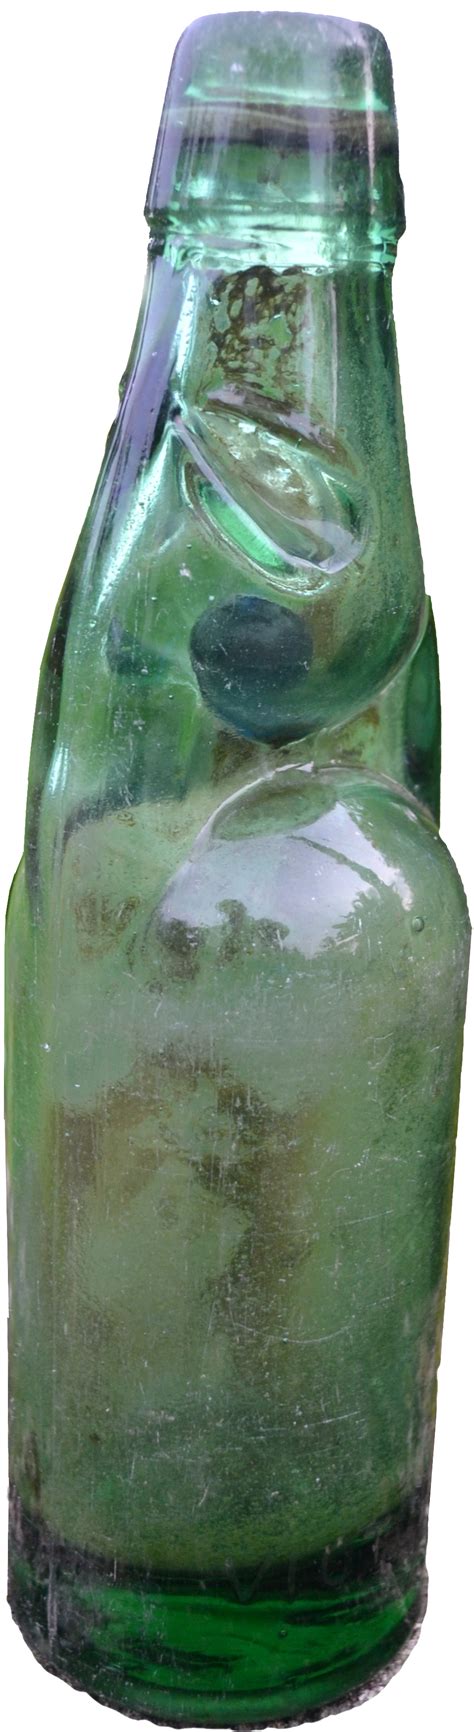 File Codd Neck Soda Water Bottle From Kerala Png Wikimedia Commons